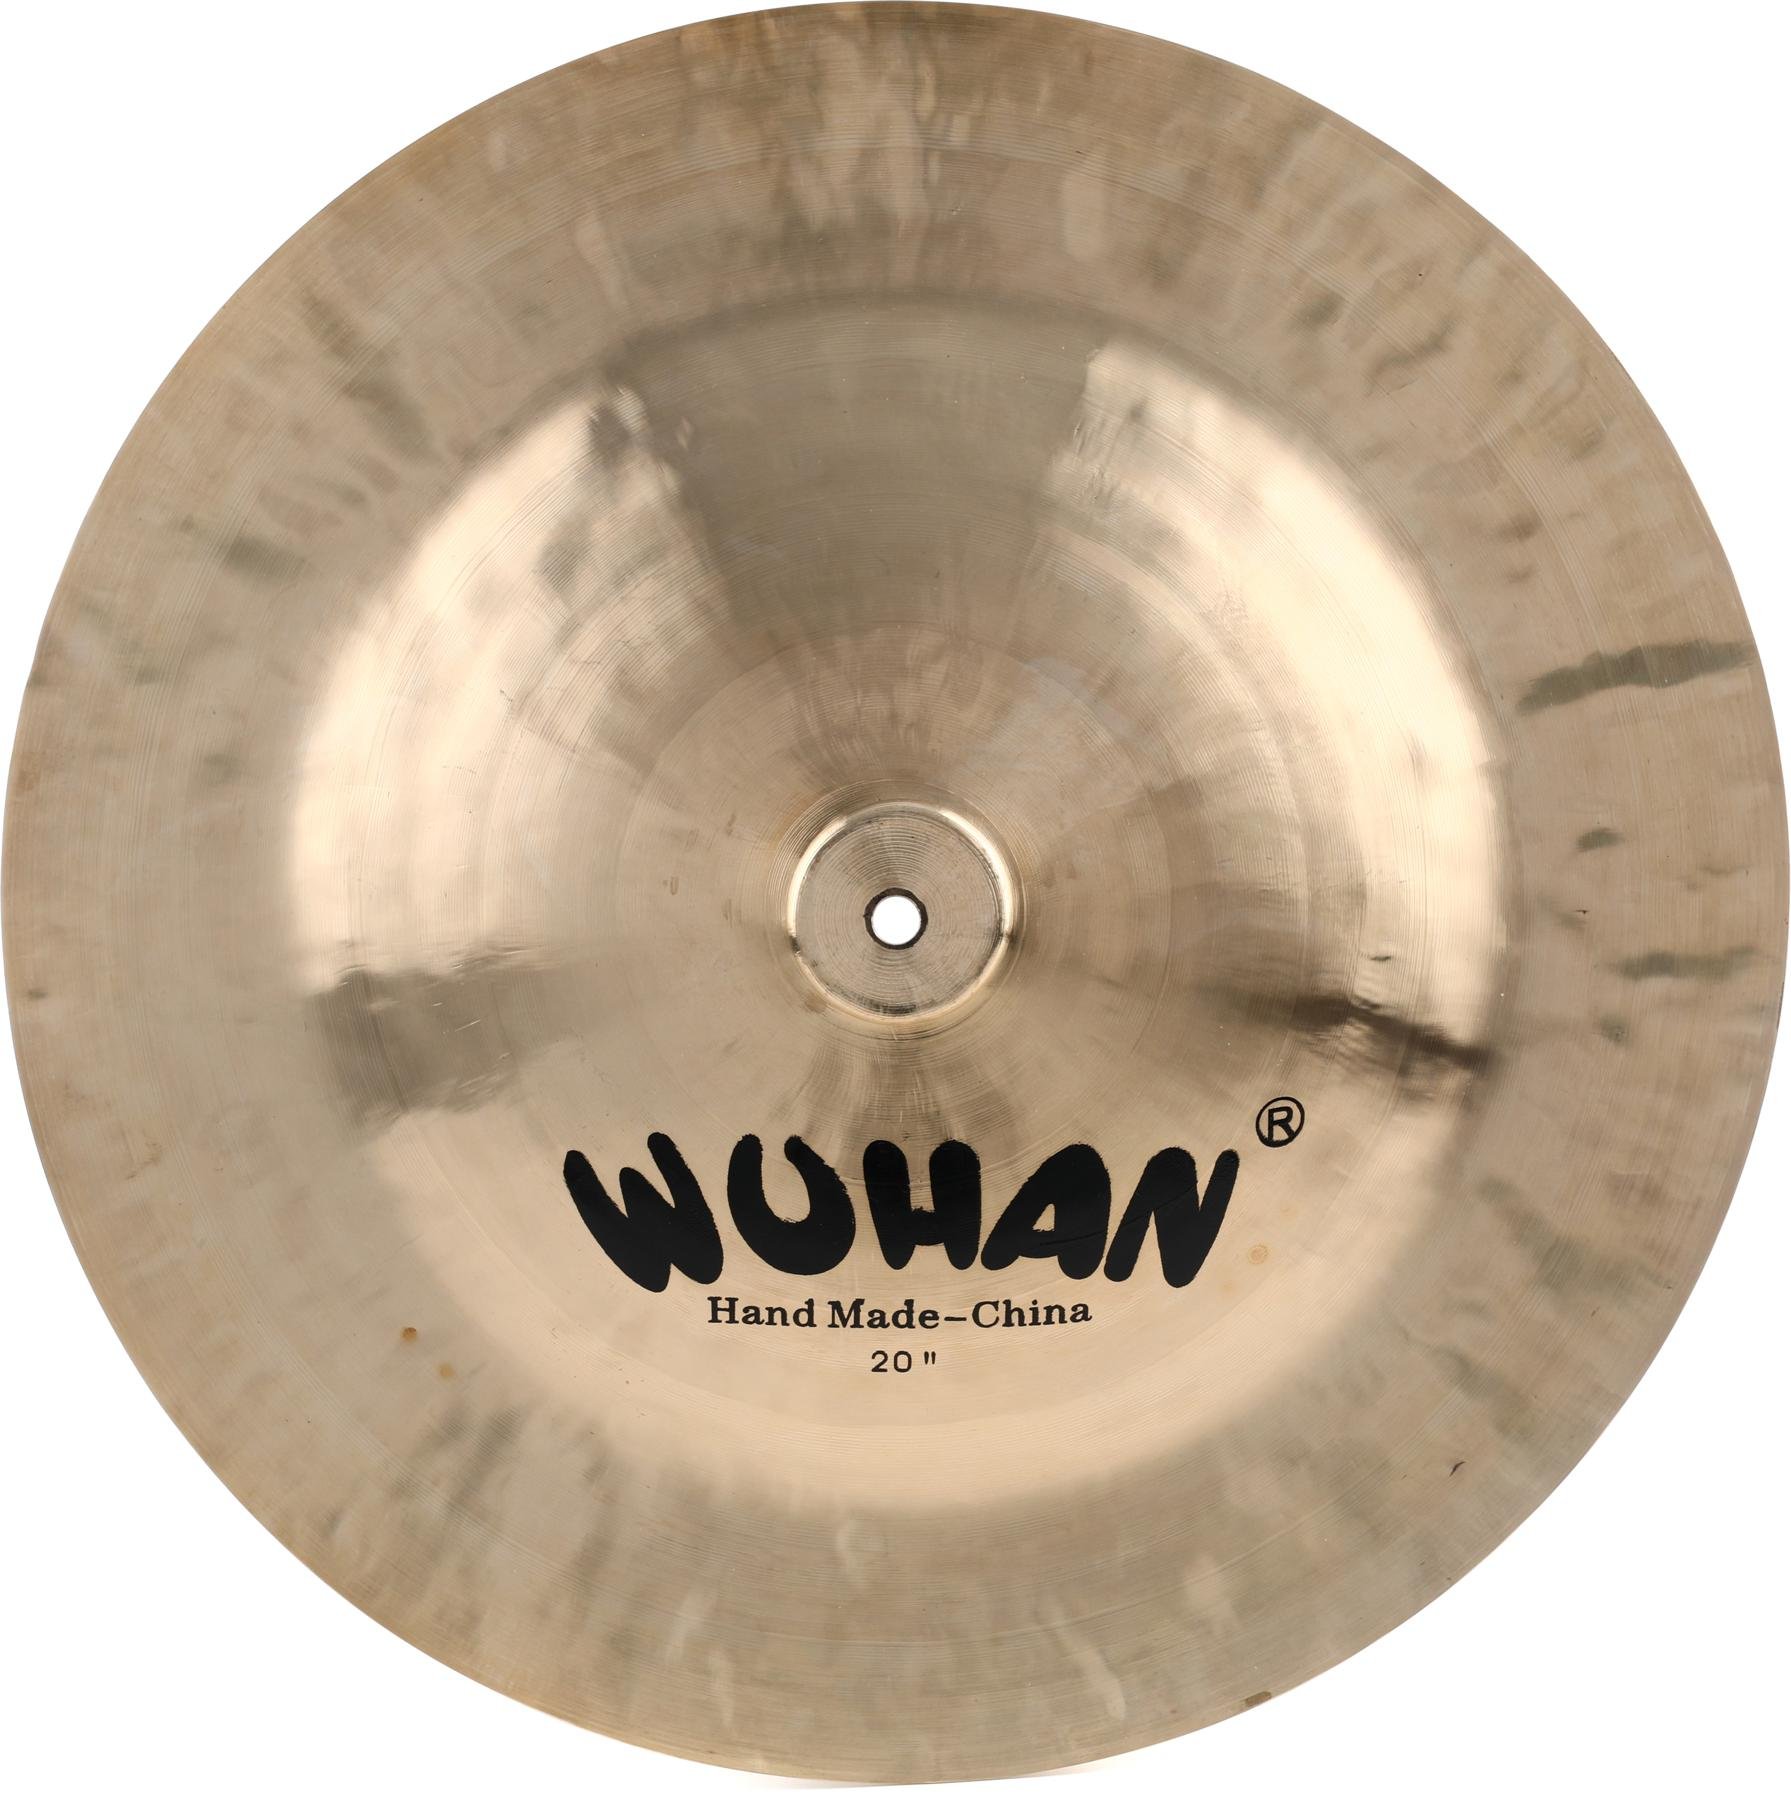 Wuhan 20 inch China Cymbal | Sweetwater